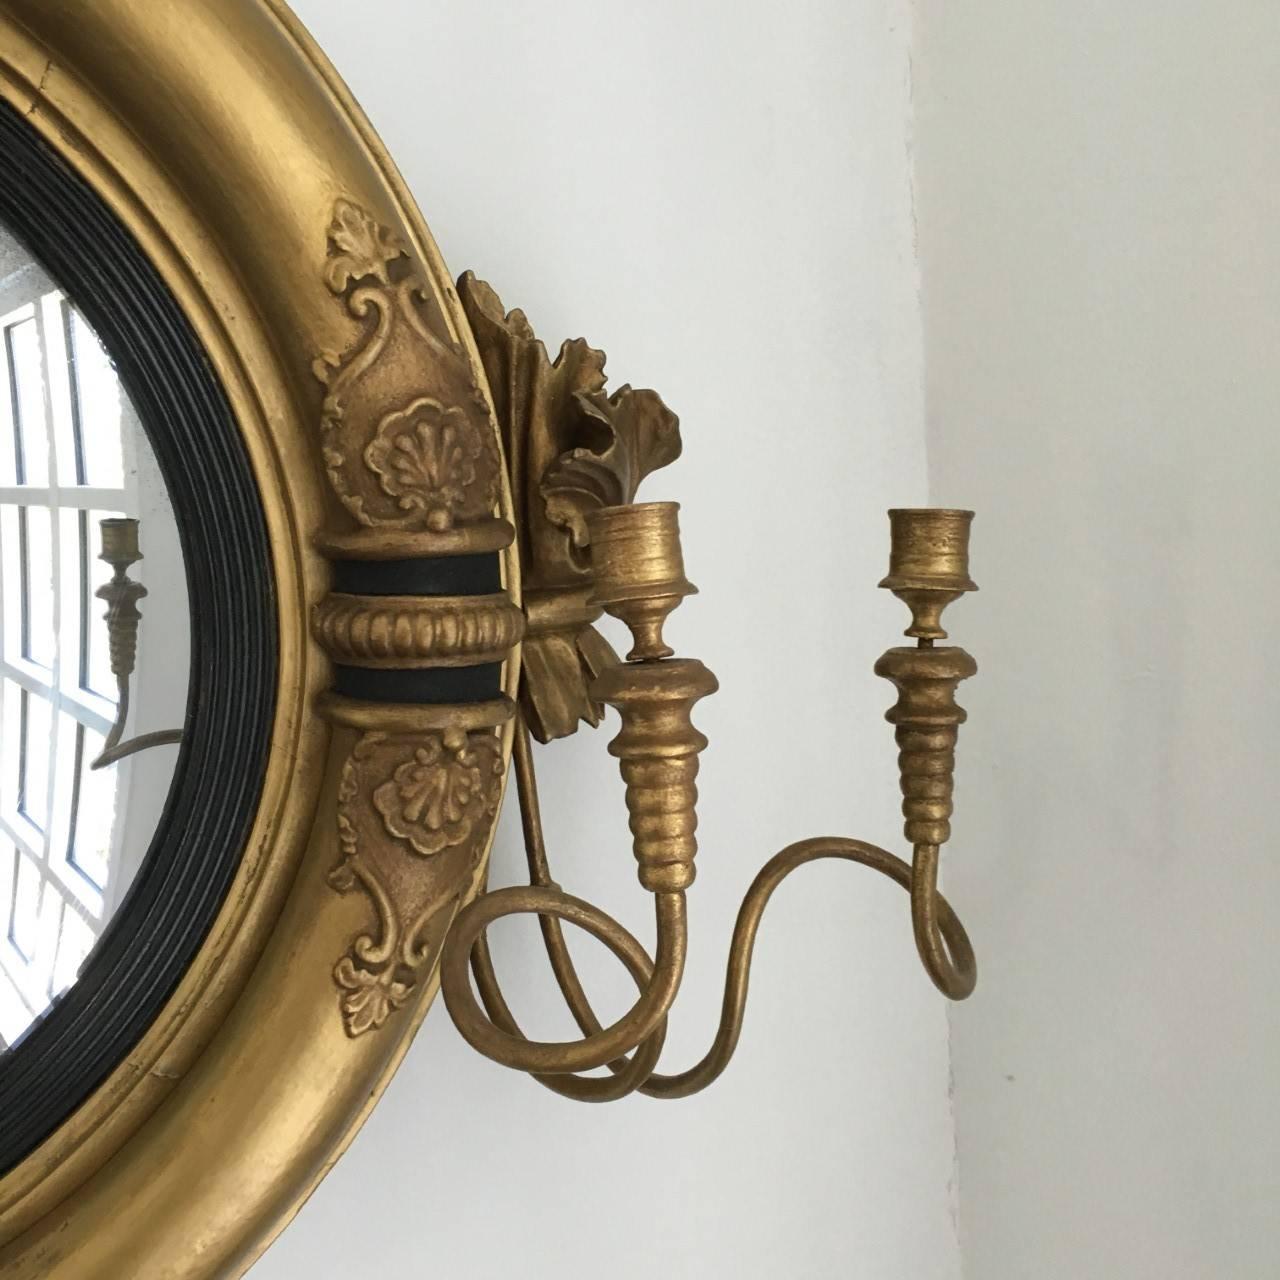 English Regency period convex girandole mirror, circa 1810-1820.